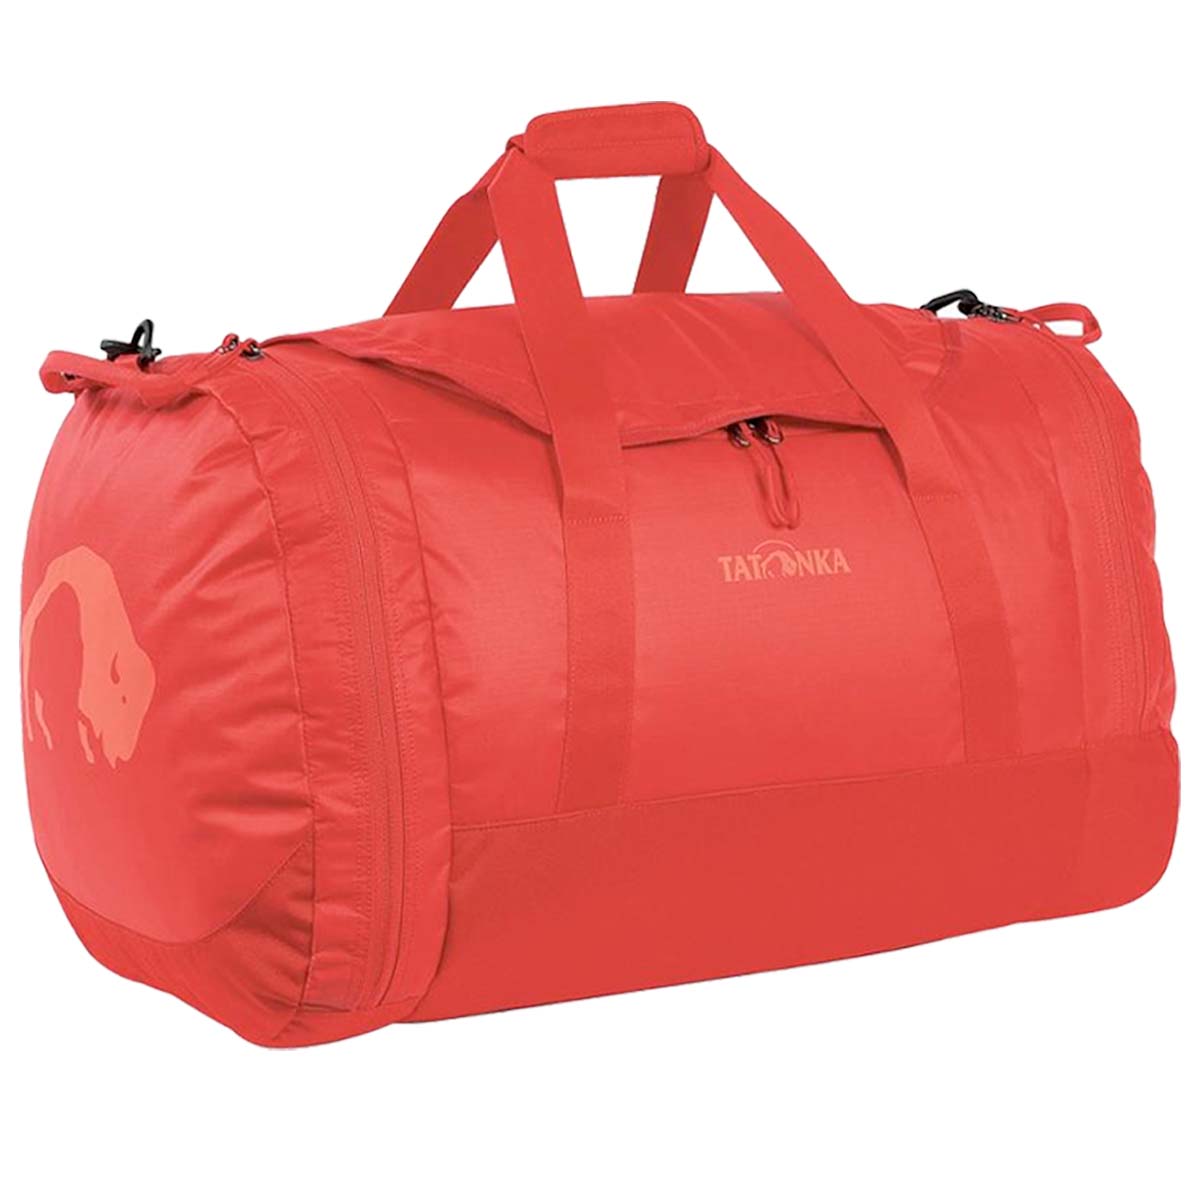 Tatonka Folding Travel Duffle Bag Large 55L